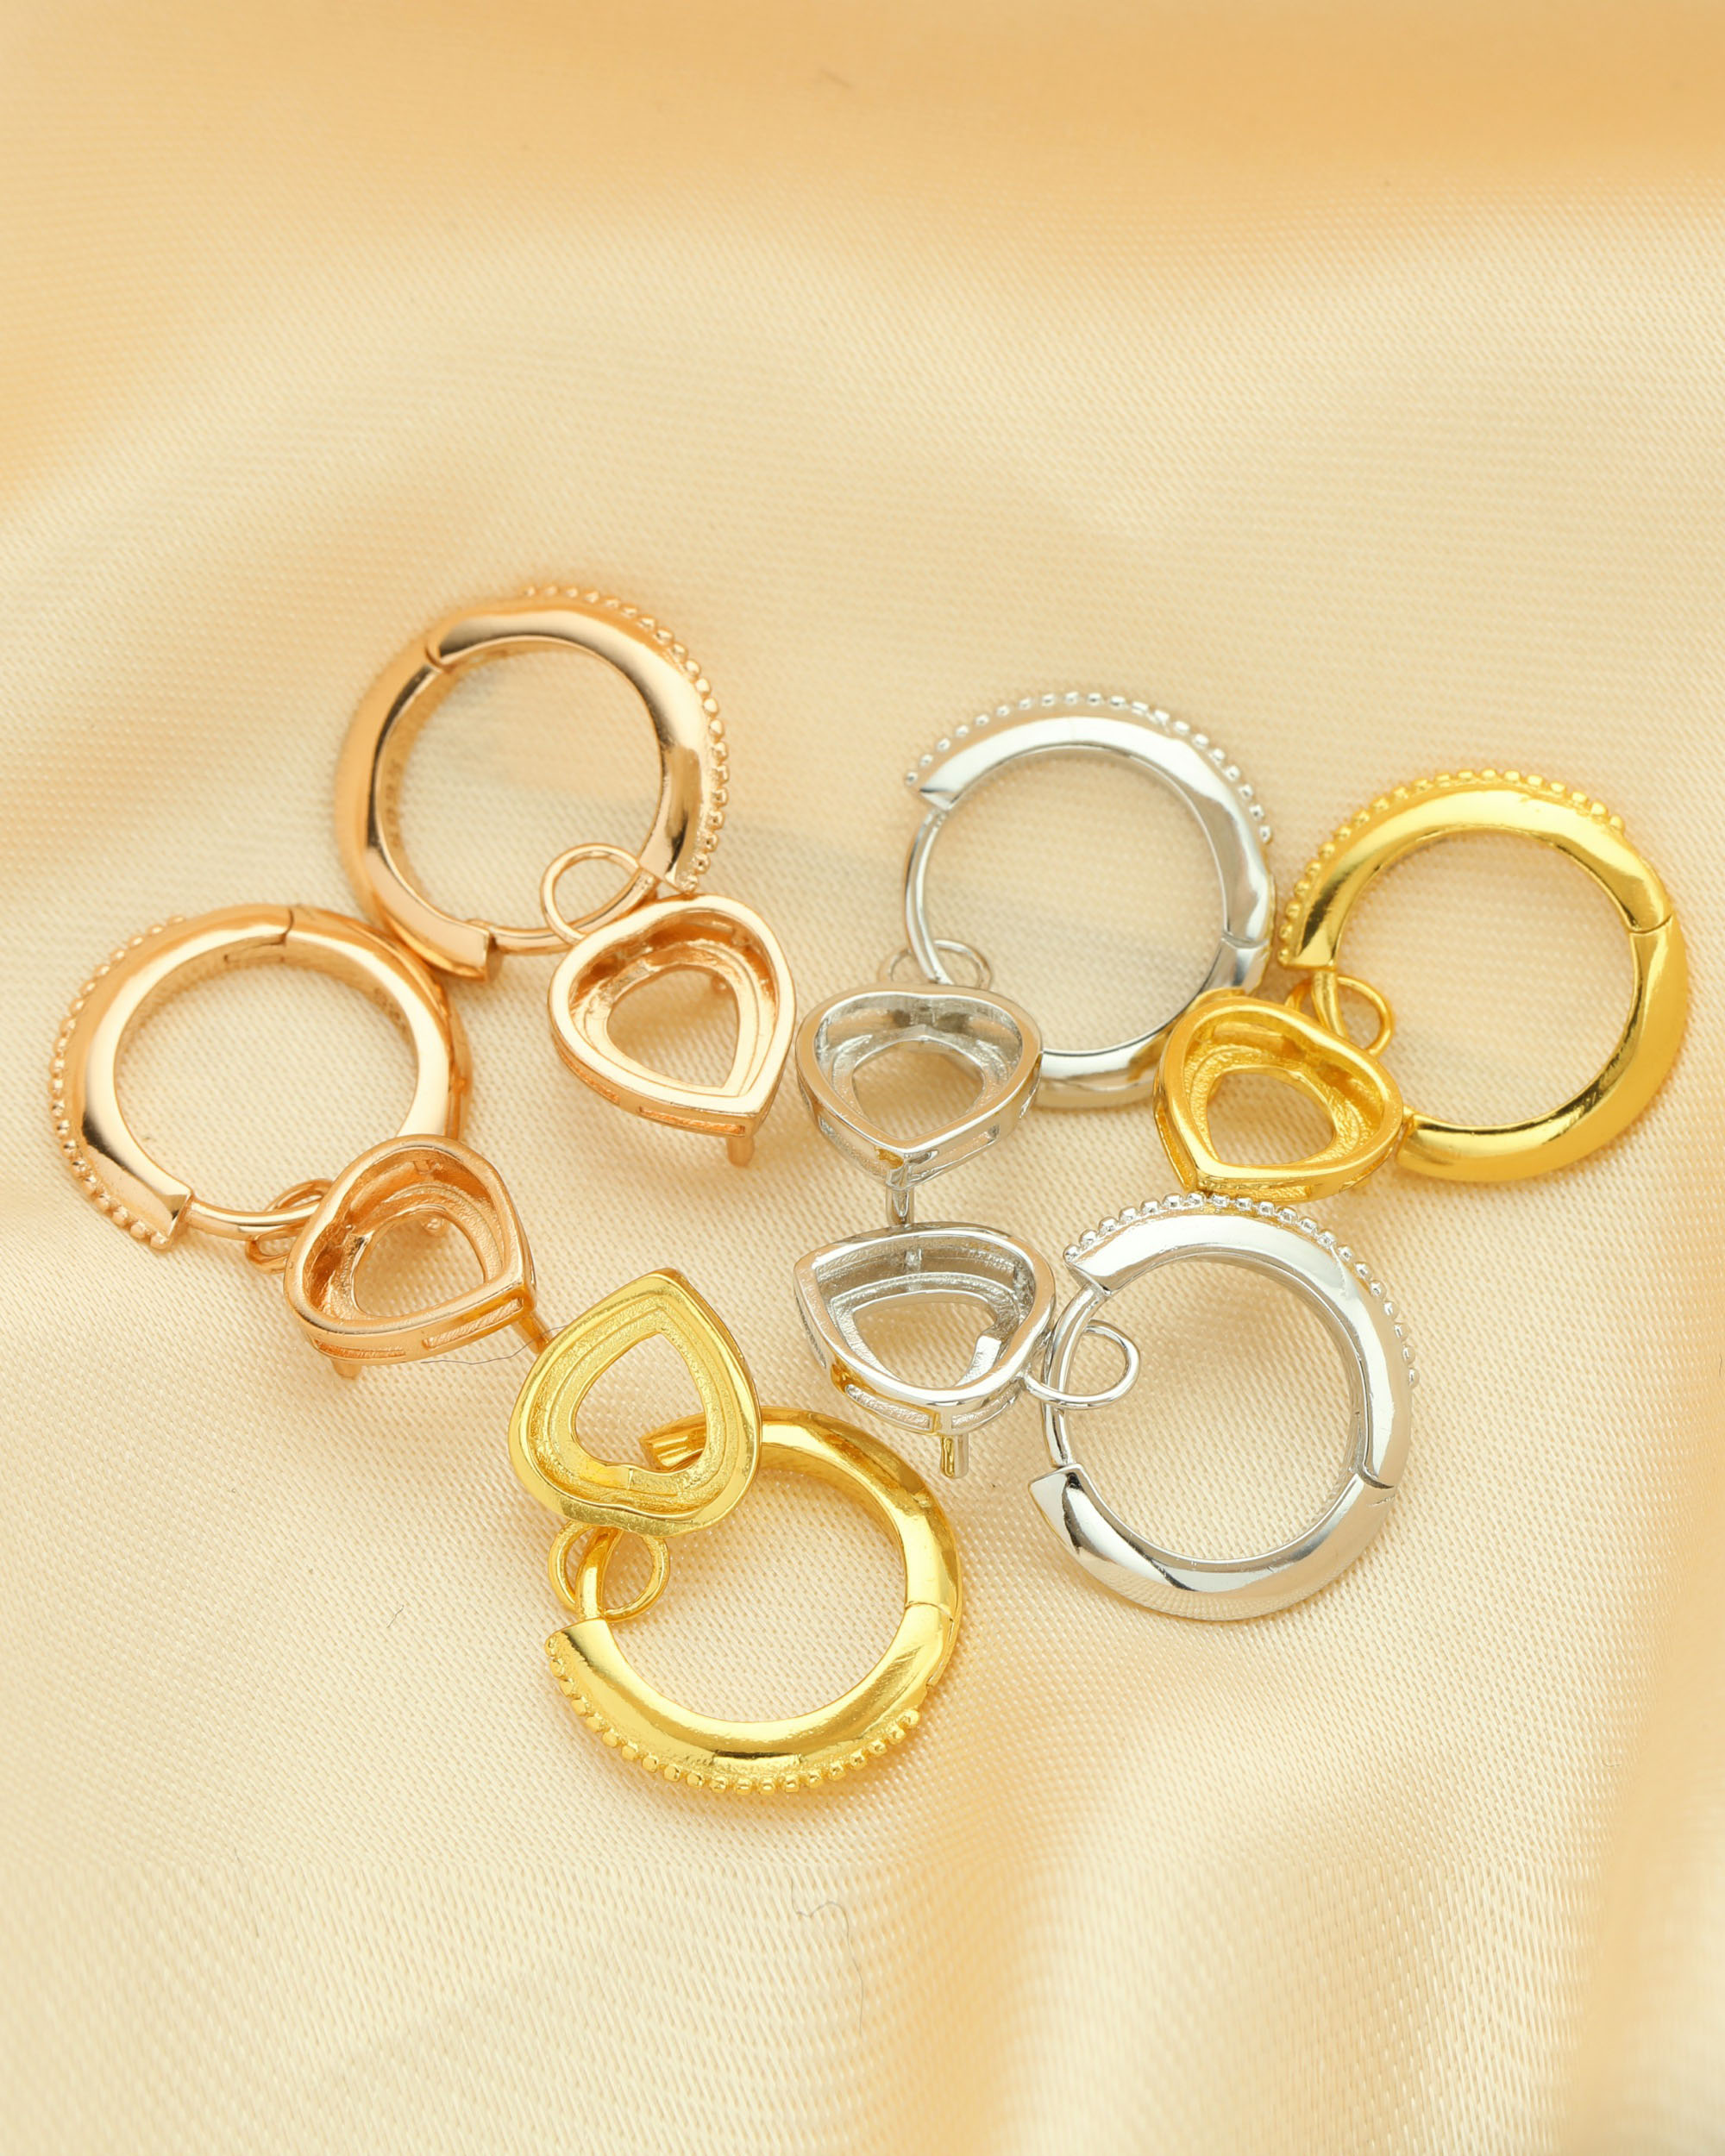 6MM Heart Prong Hooks Earrings Settings,Solid 925 Sterling Silver Rose Gold Plated Earrings,Simple Earring,DIY Earrings Bezel 1706118 - Click Image to Close